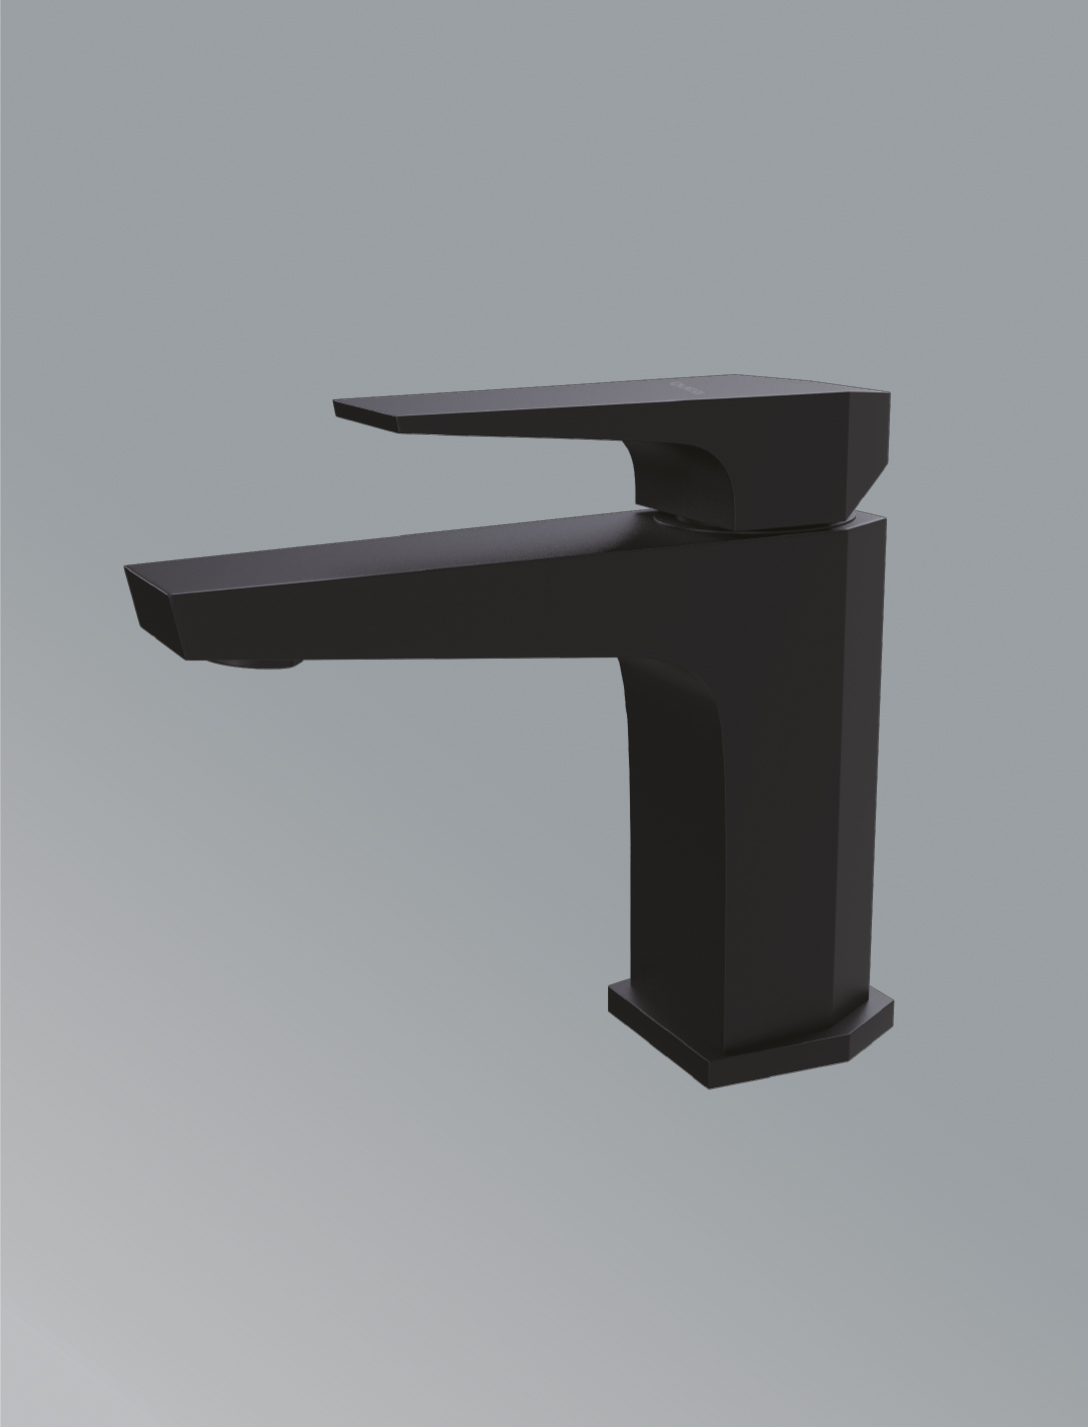  Single Control basin faucet in matt black